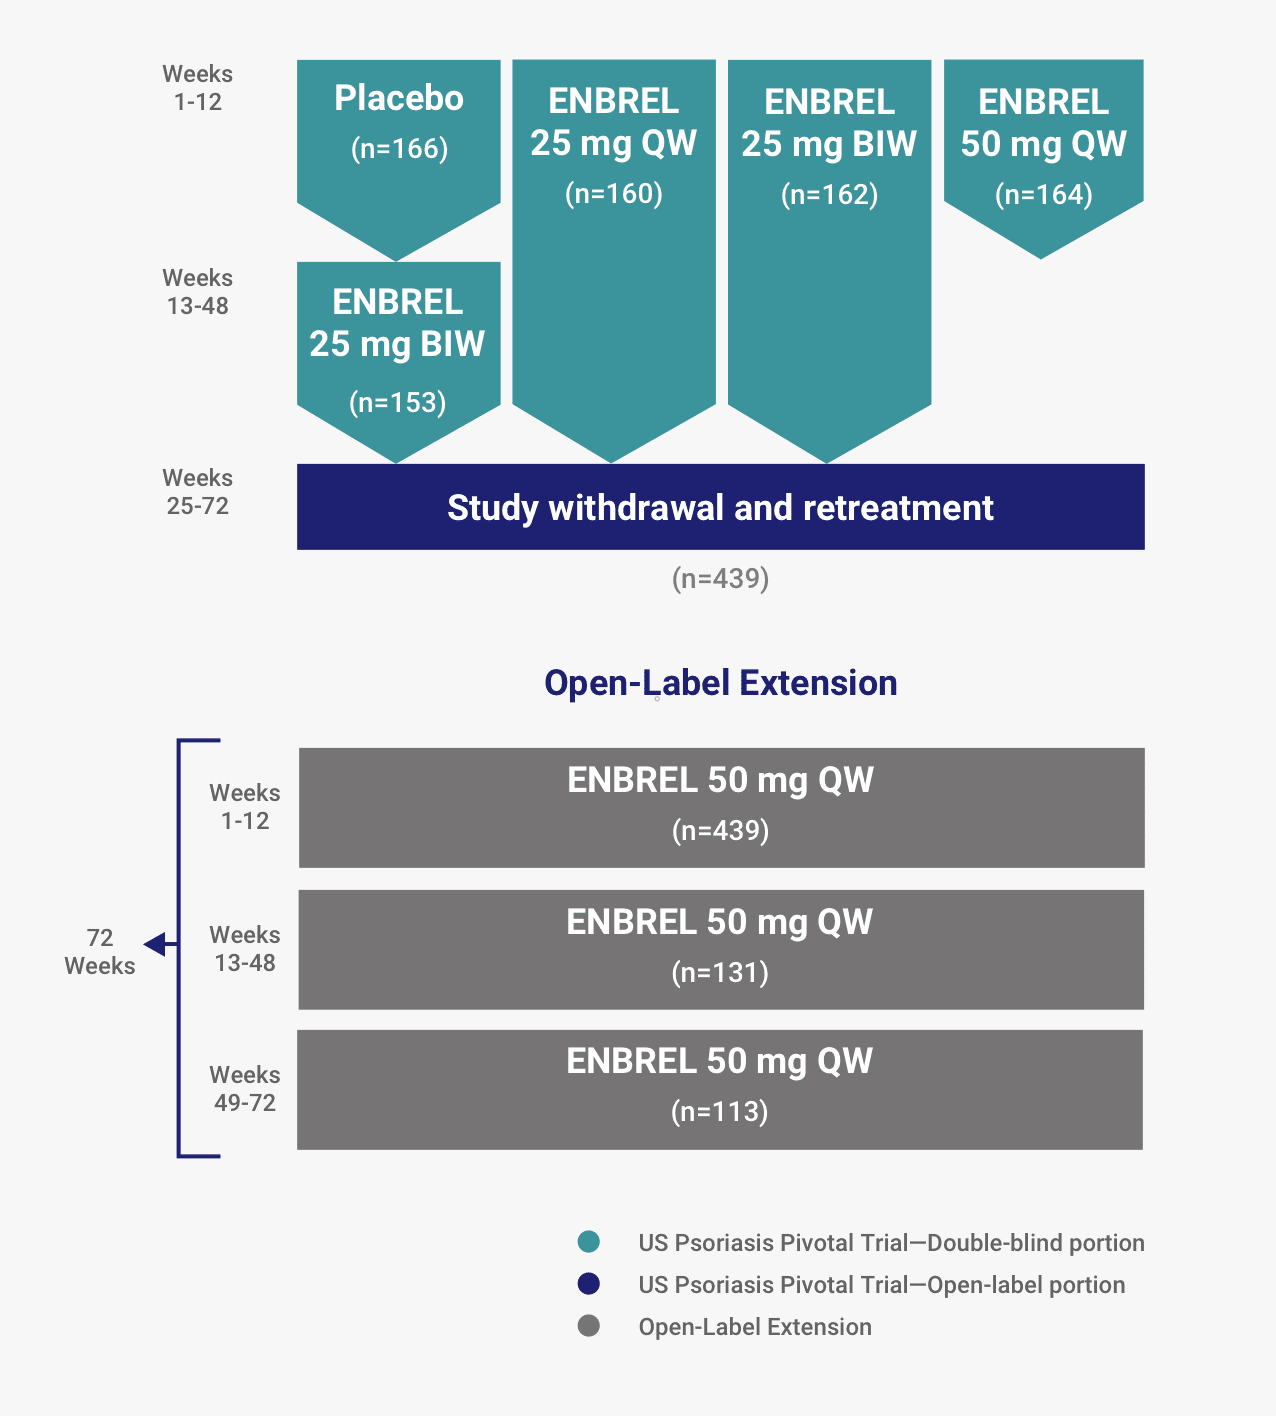 ENBREL US Psoriasis Pivotal Trial Study Design